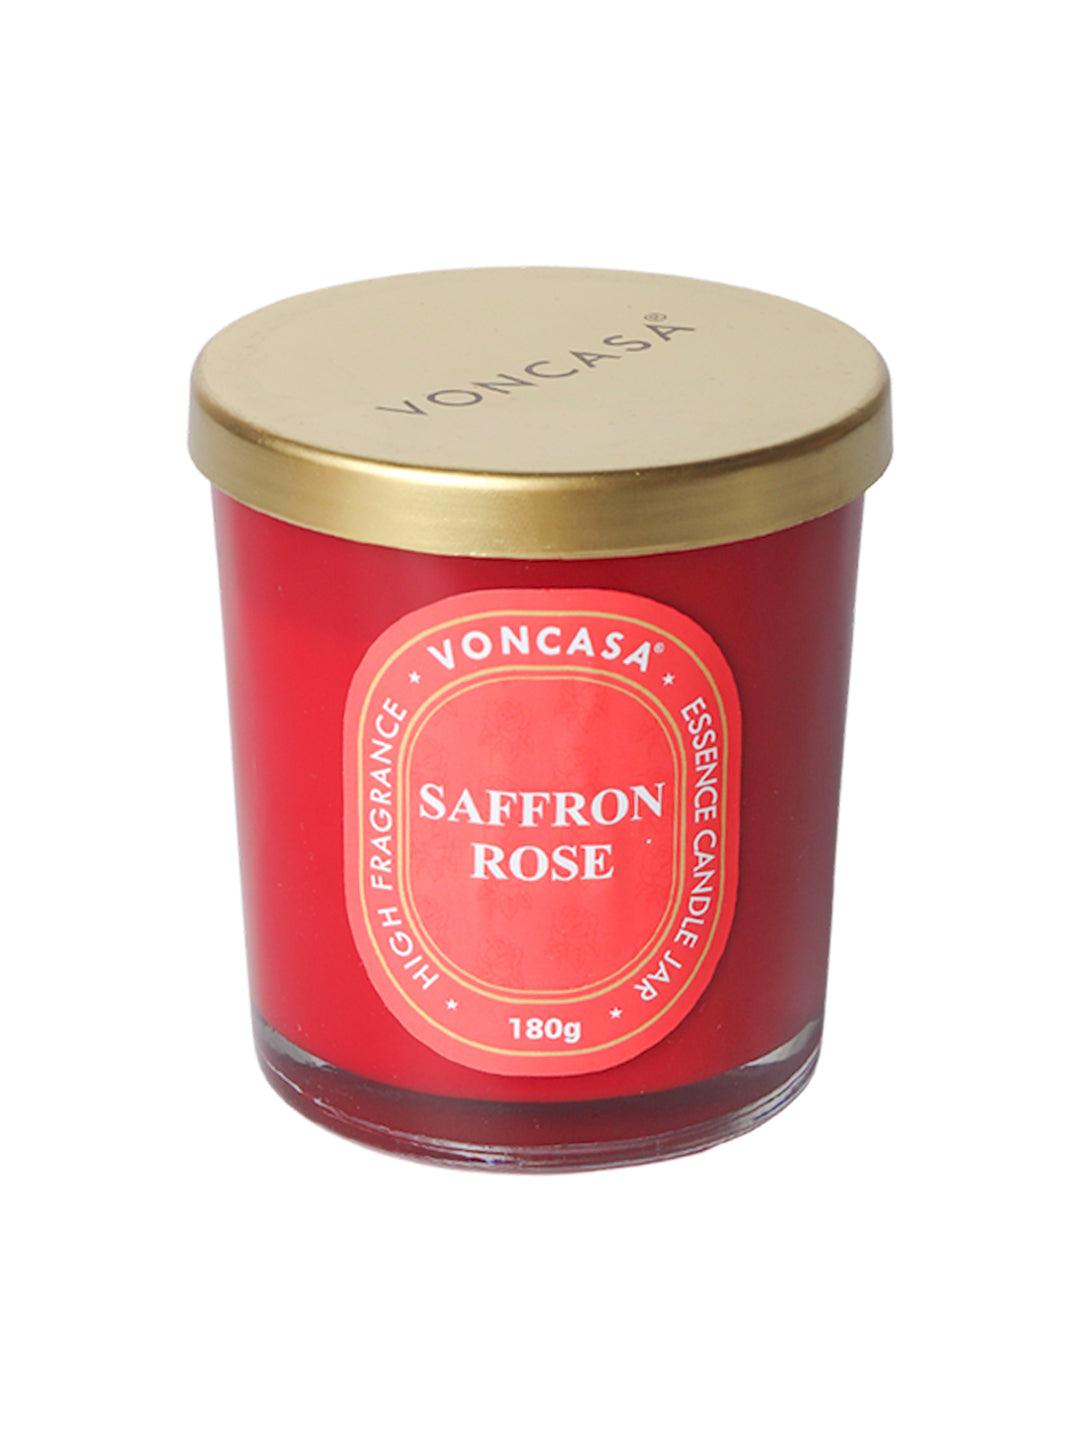 VON CASA Saffron Rose Candle - MARKET 99